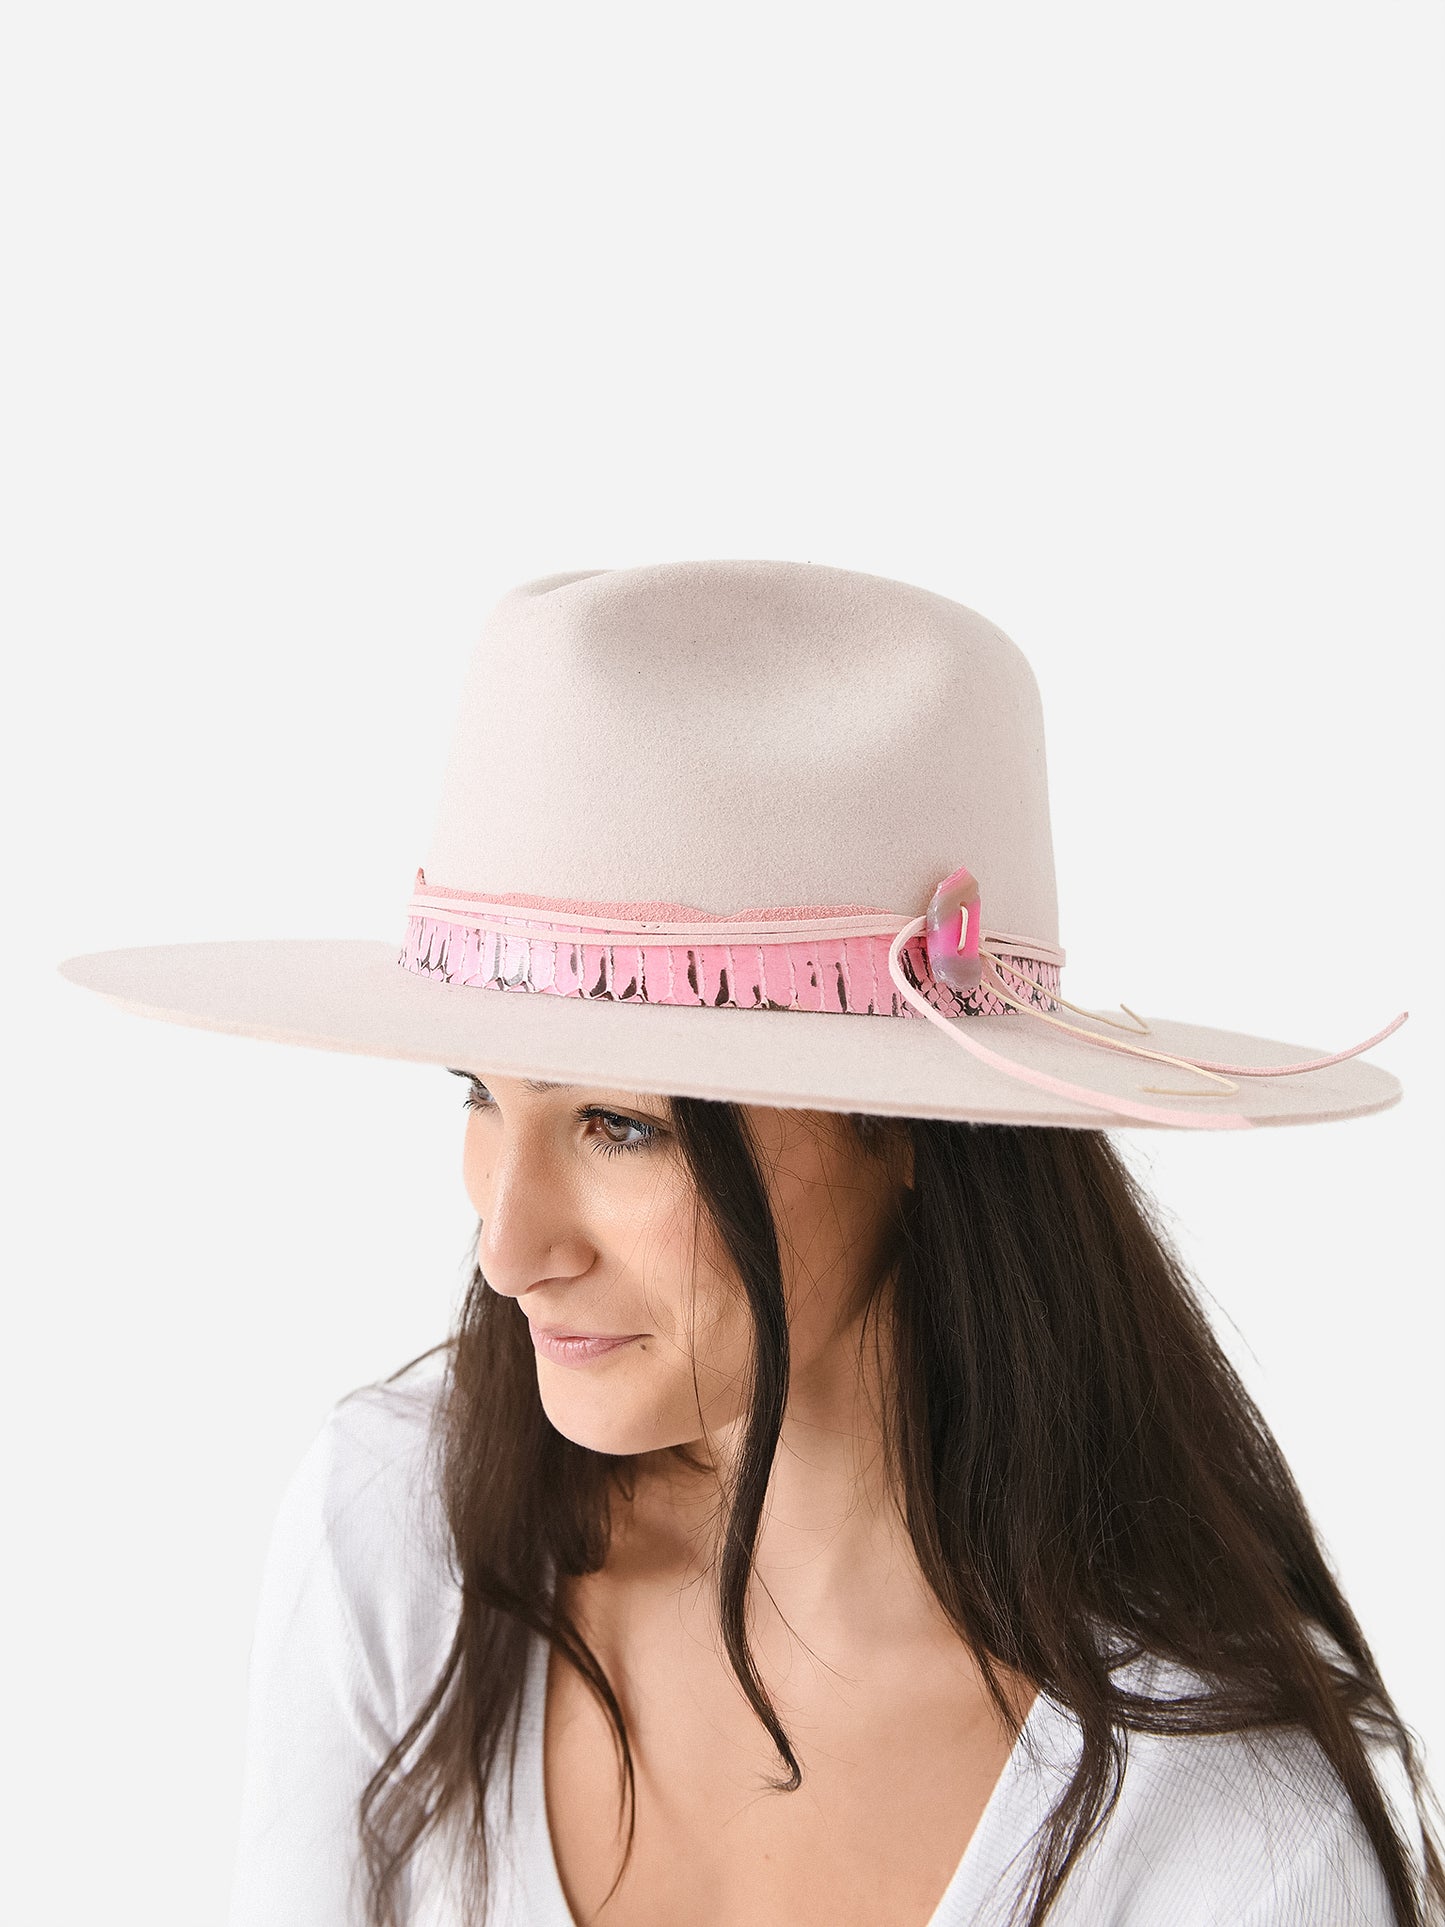 Stetson Women's Sedona Hat